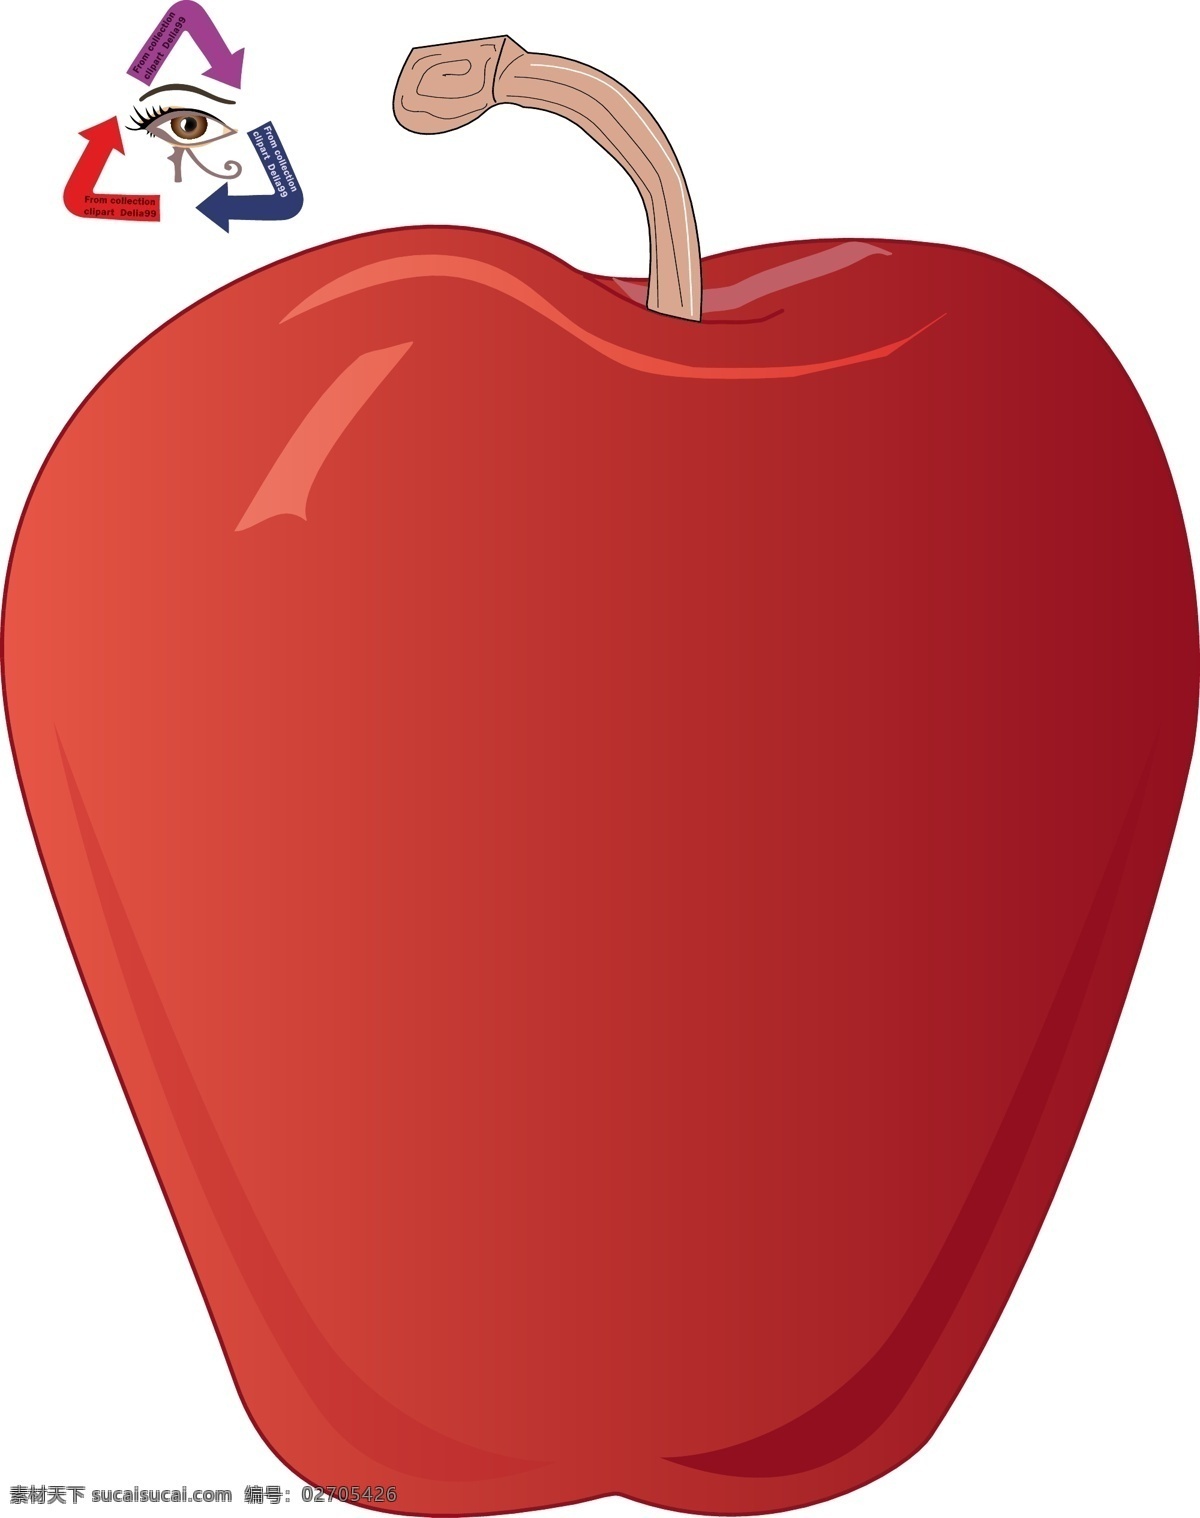 apple 红苹果 农产品 农业 苹果 苹果矢量素材 矢量苹果 矢量图库 水果 苹果模板下载 水晶苹果 水果店素材 果产 种植业